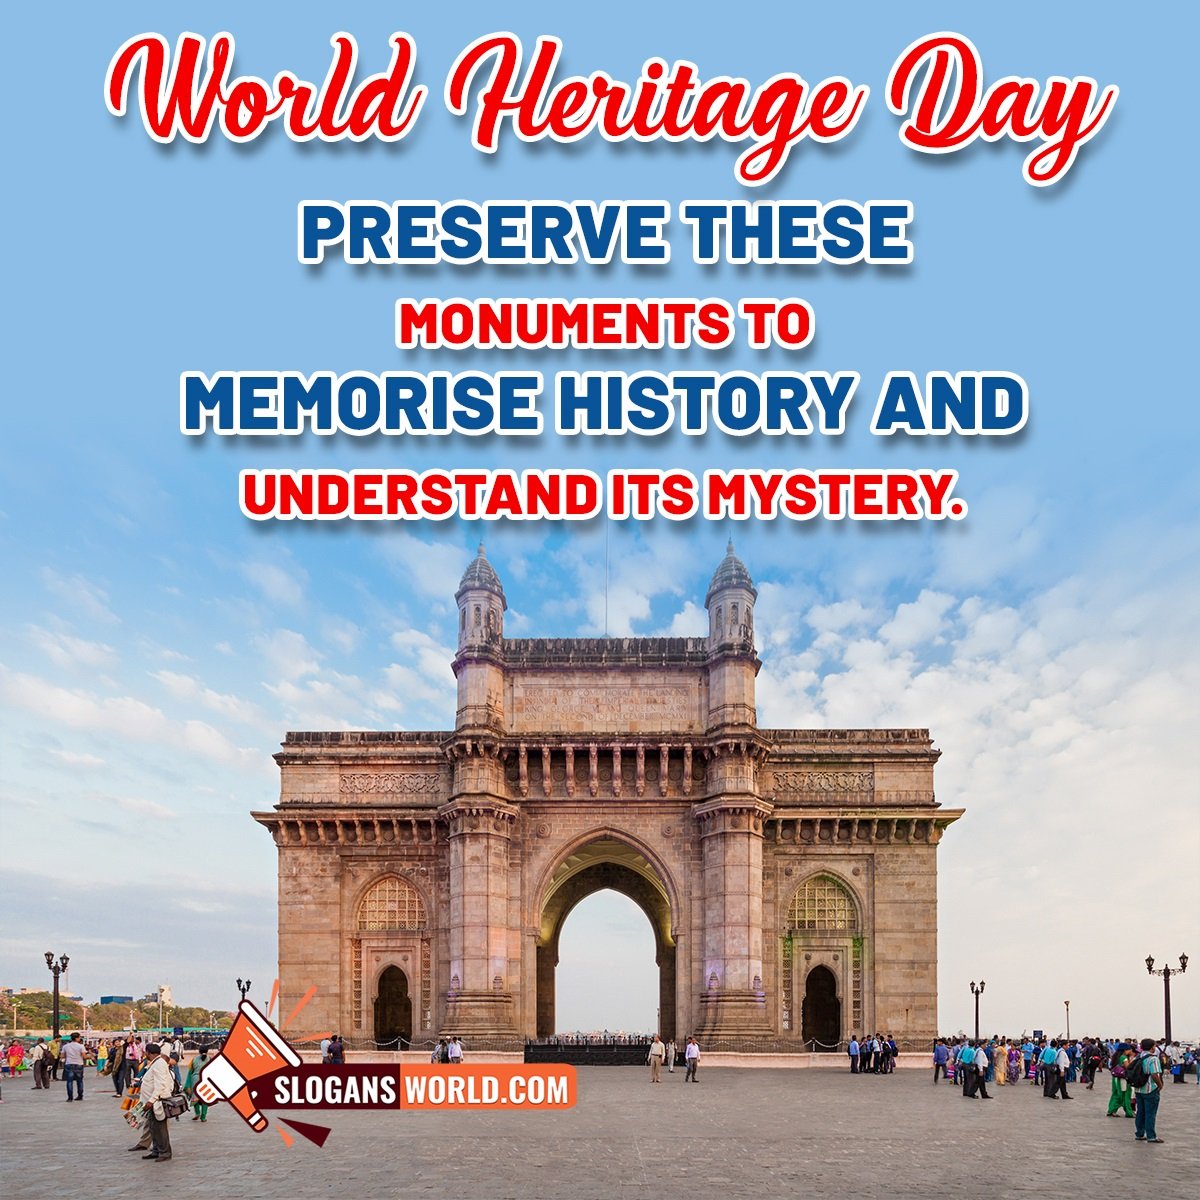 Slogan On World Heritage Day